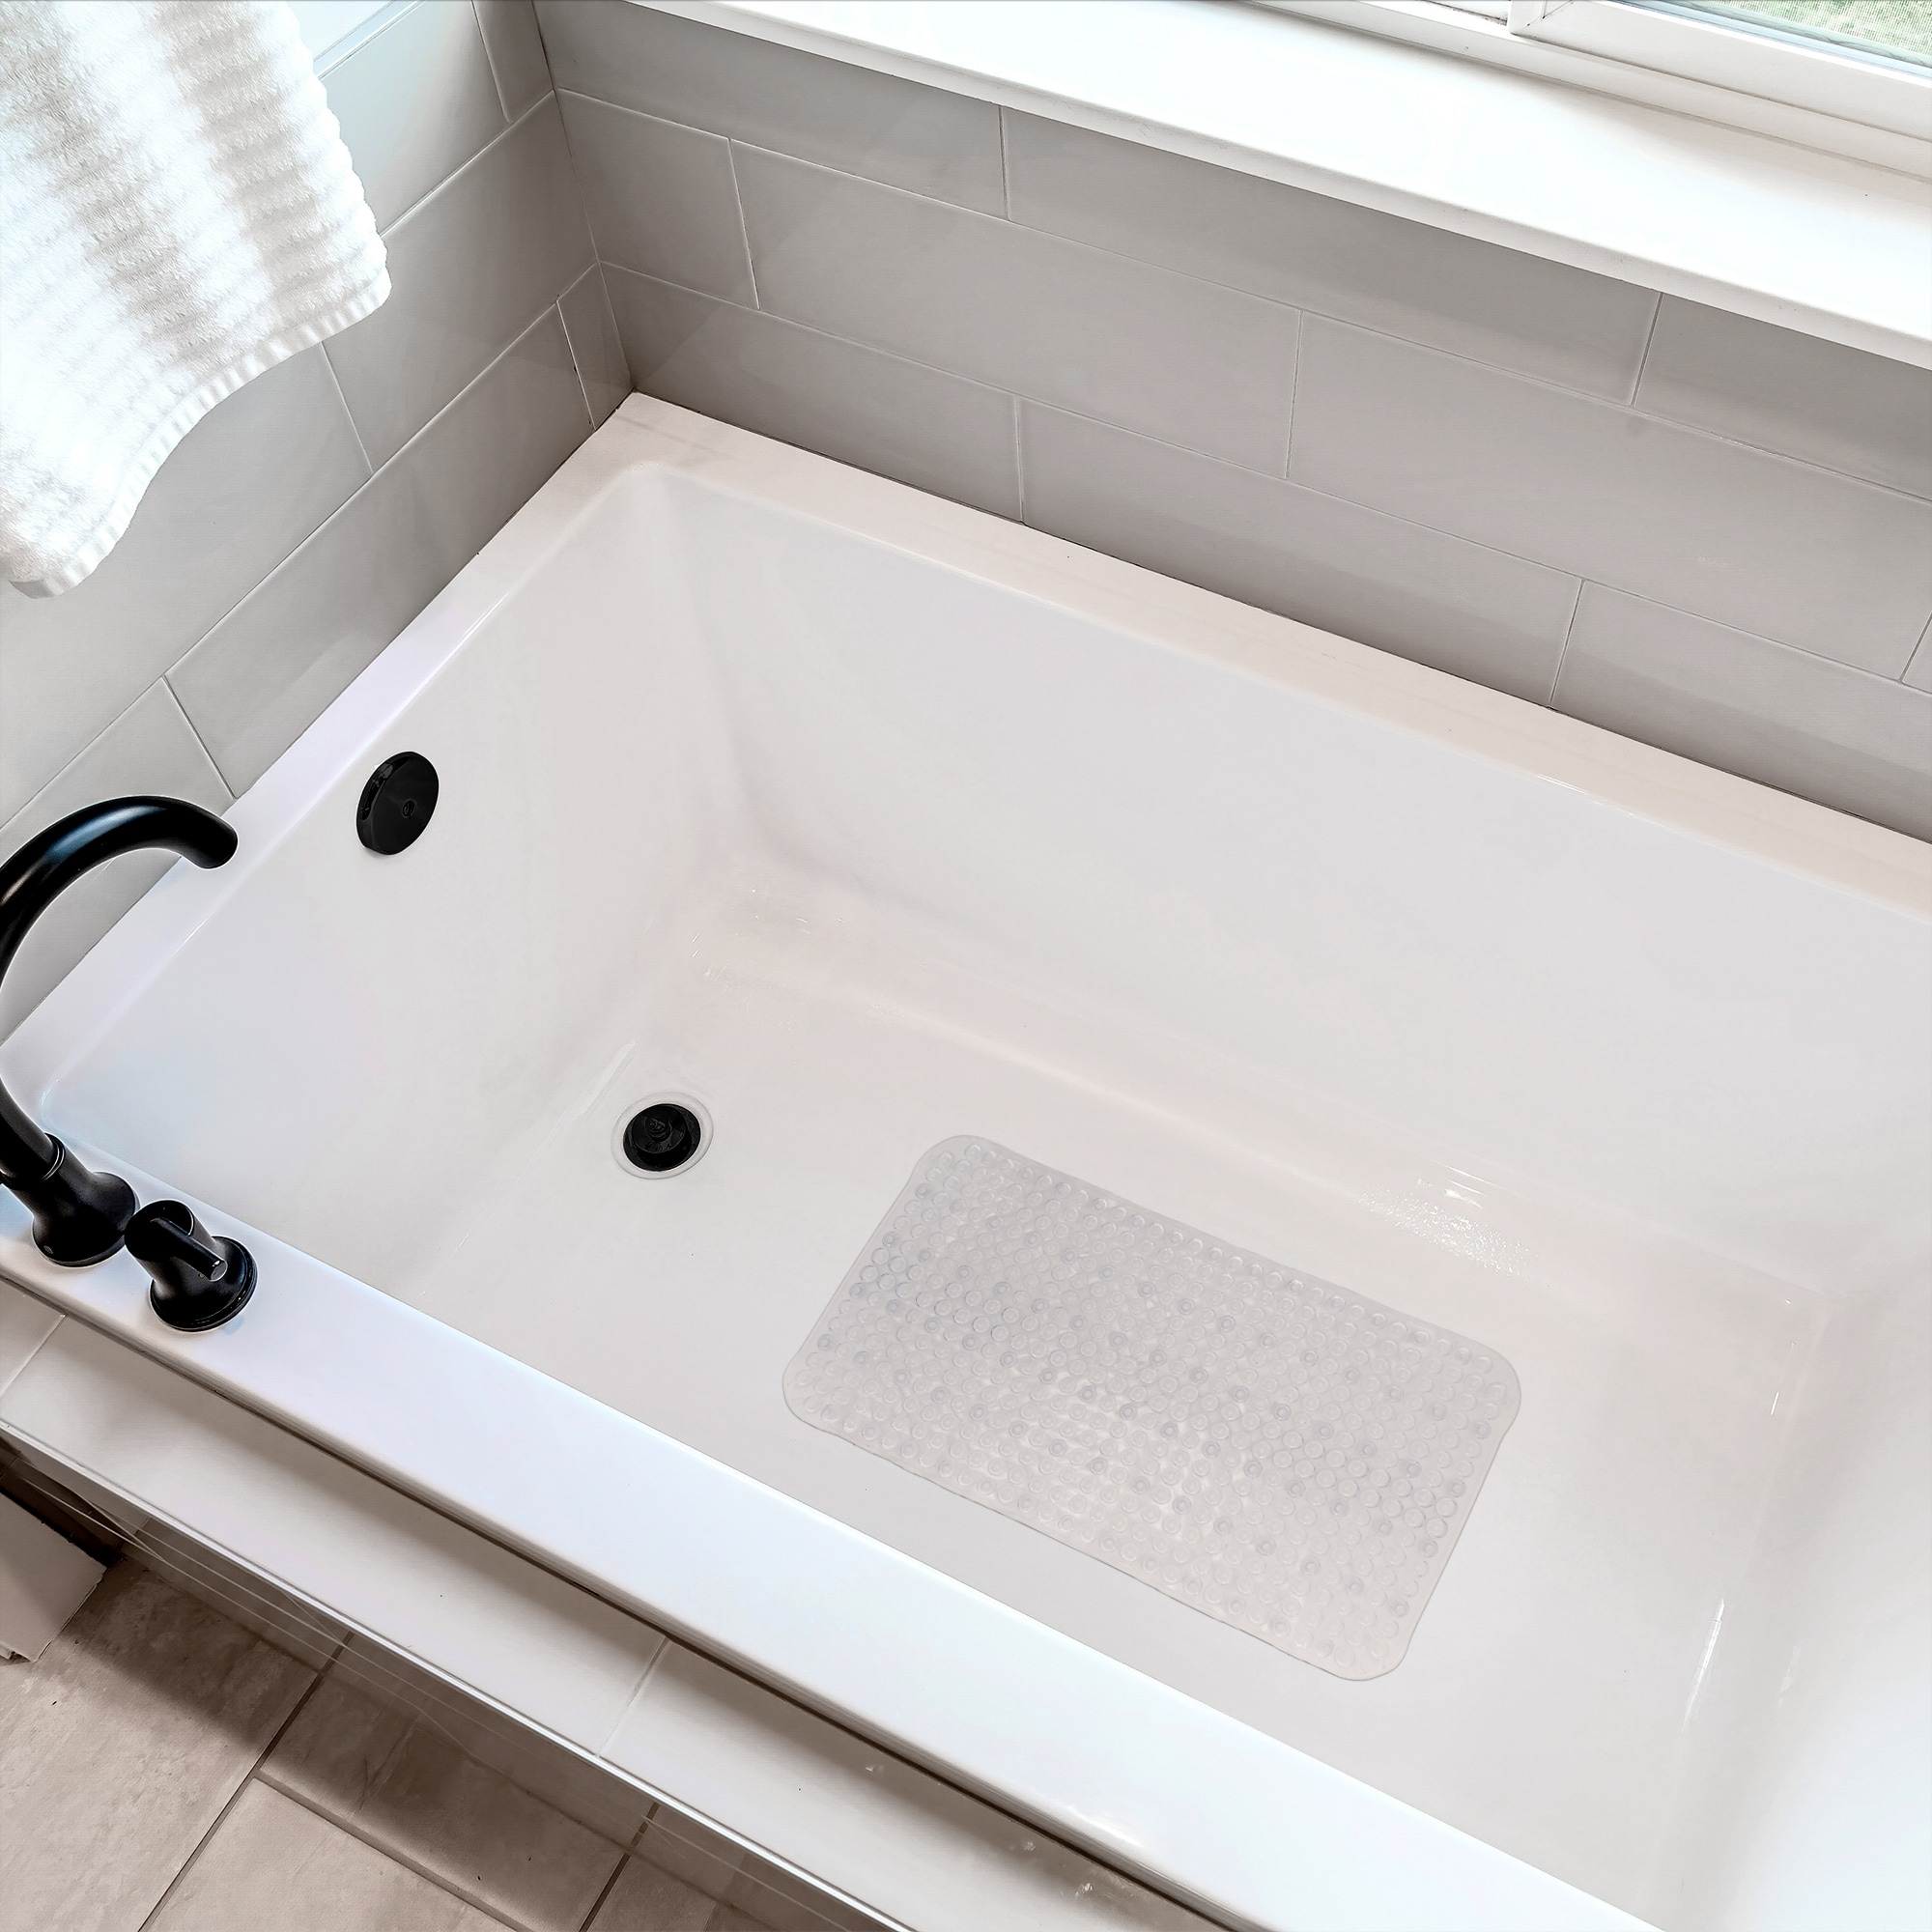 Bath Bliss Anti-Slip Jumbo Bath Mat in White